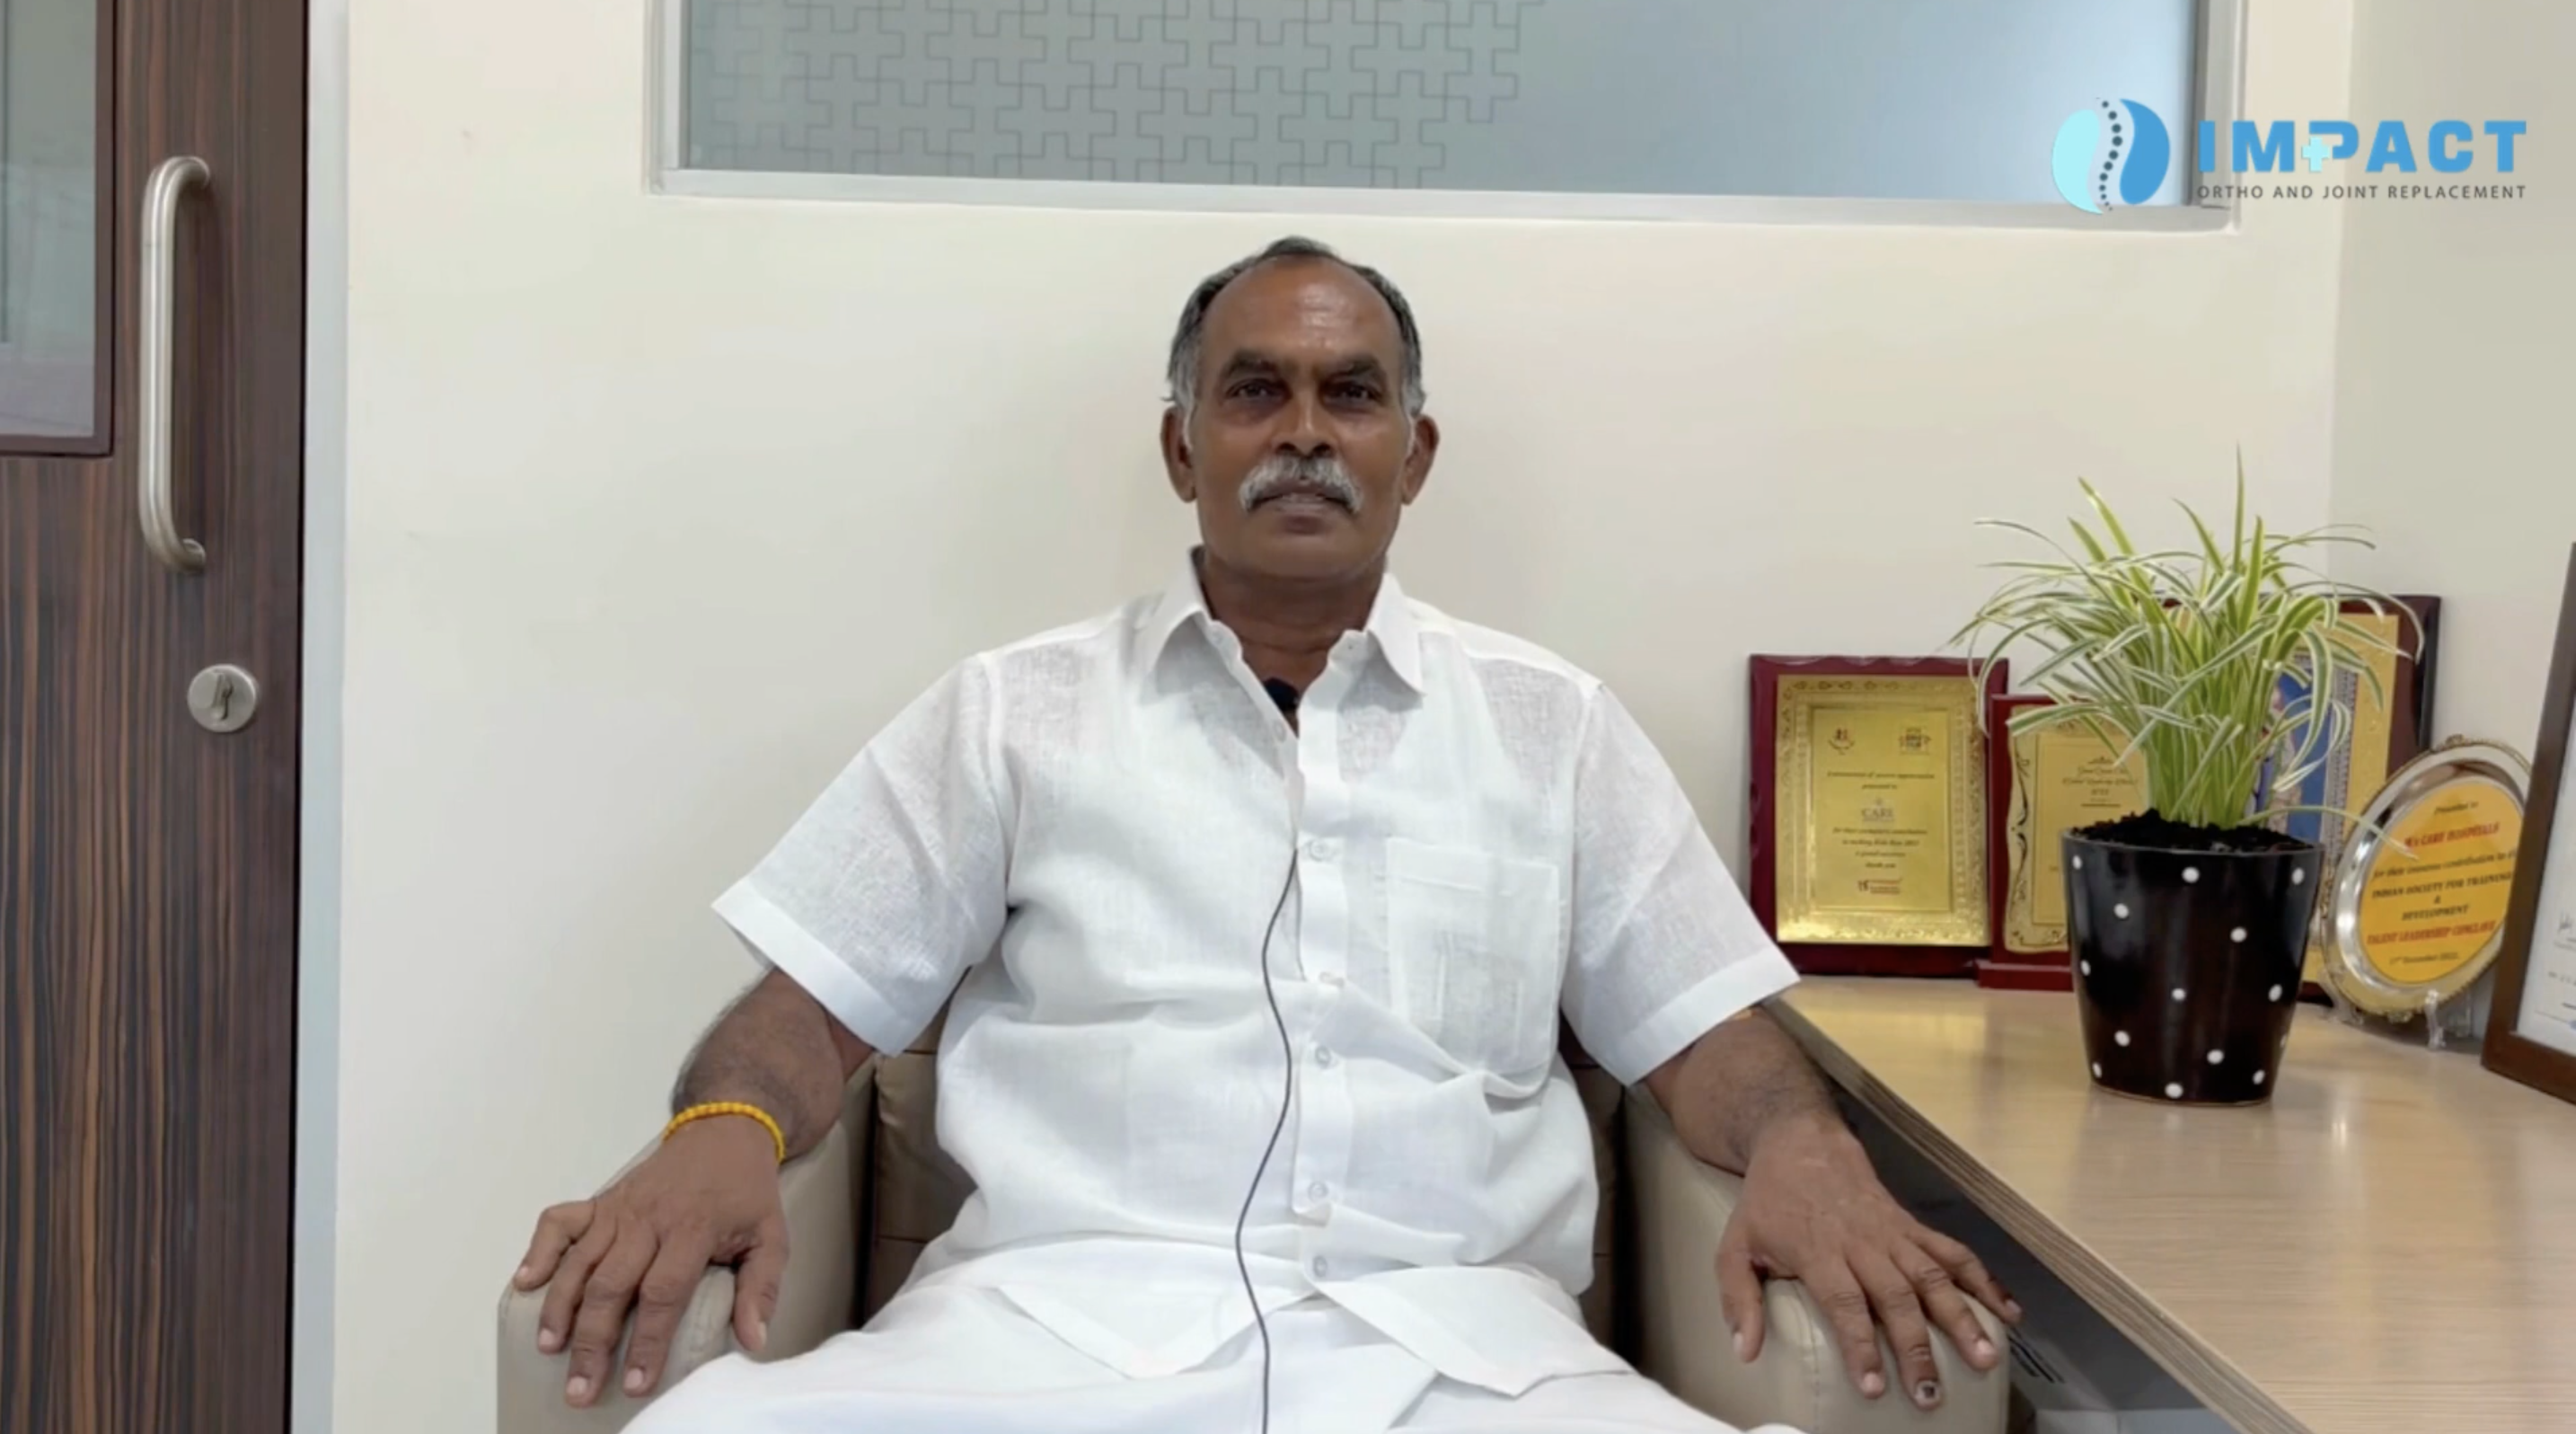 Total Knee Replacement - Testimonial - Dr. Ratnakar Rao, Orthopedic Surgeon, Impact Ortho Center